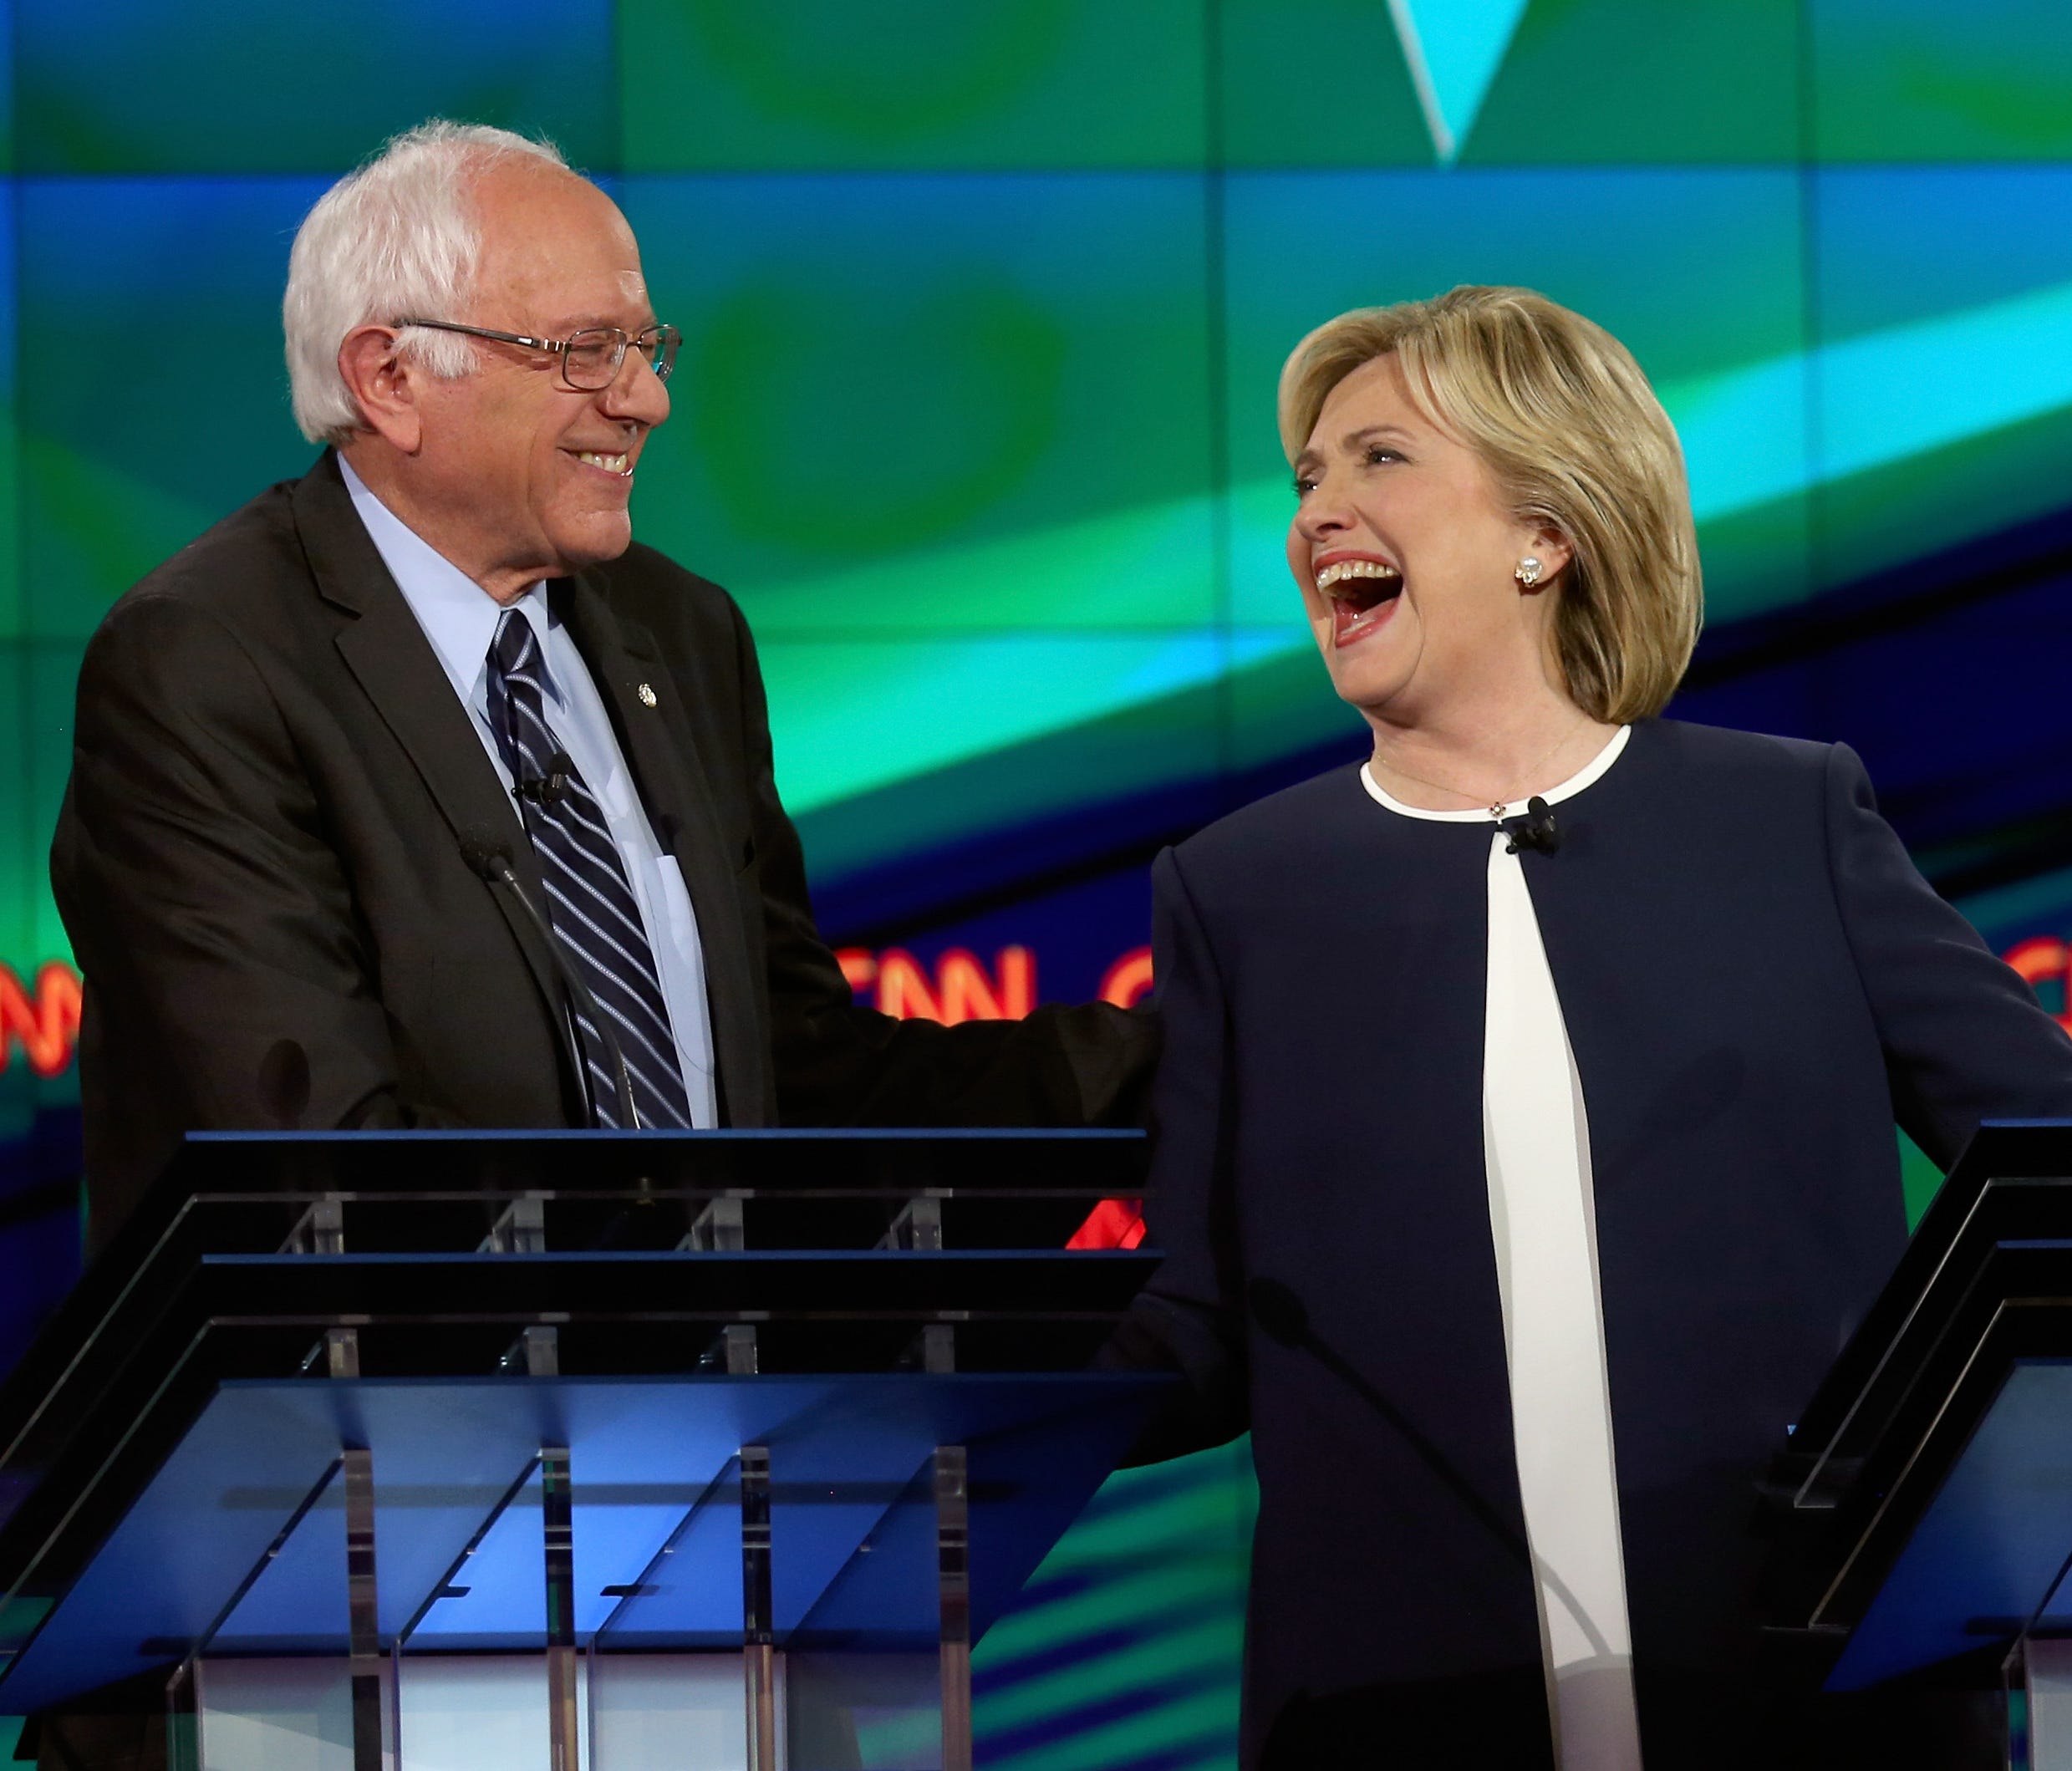 Democratic presidential candidates Sen. Bernie Sanders and Hillary Clinton take part in a presidential debate sponsored by CNN and Facebook at Wynn Las Vegas on Oct. 13, 2015 in Las Vegas, Nev.